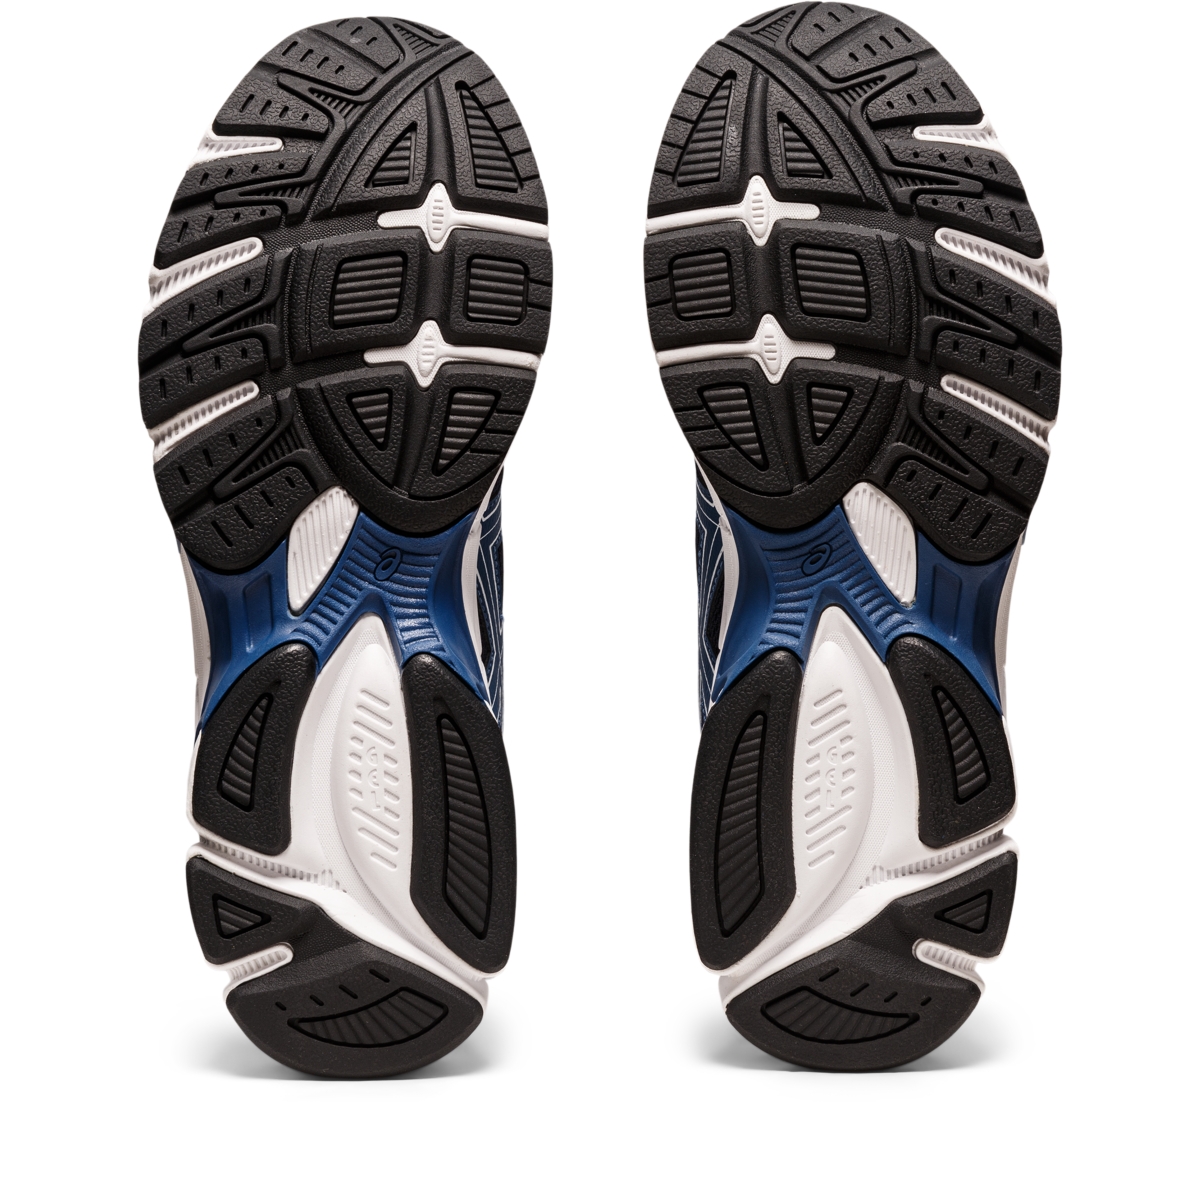 ASICS Men's GEL-JOG MC Running Shoes 1201A632 | eBay